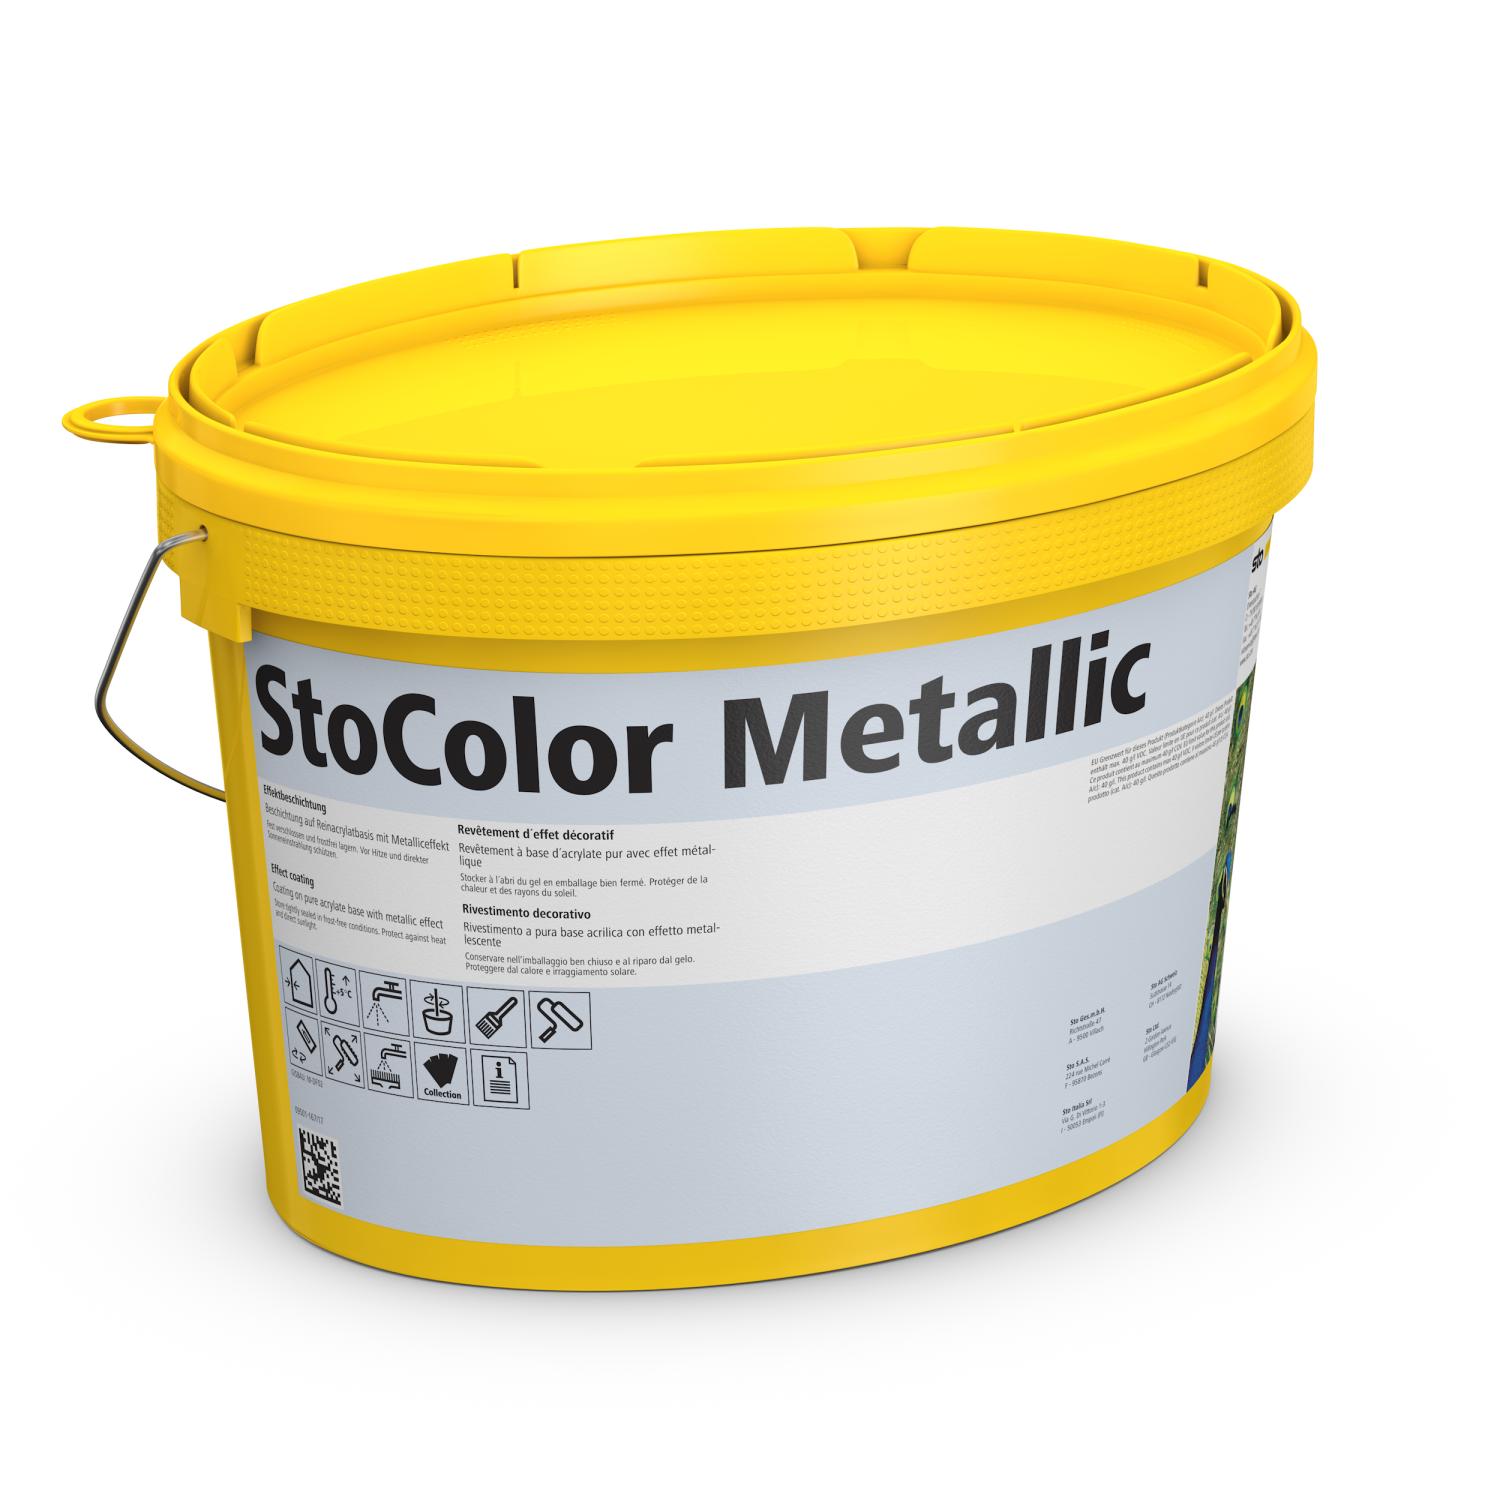 StoColor Metallic getönt - 5 l Eimer